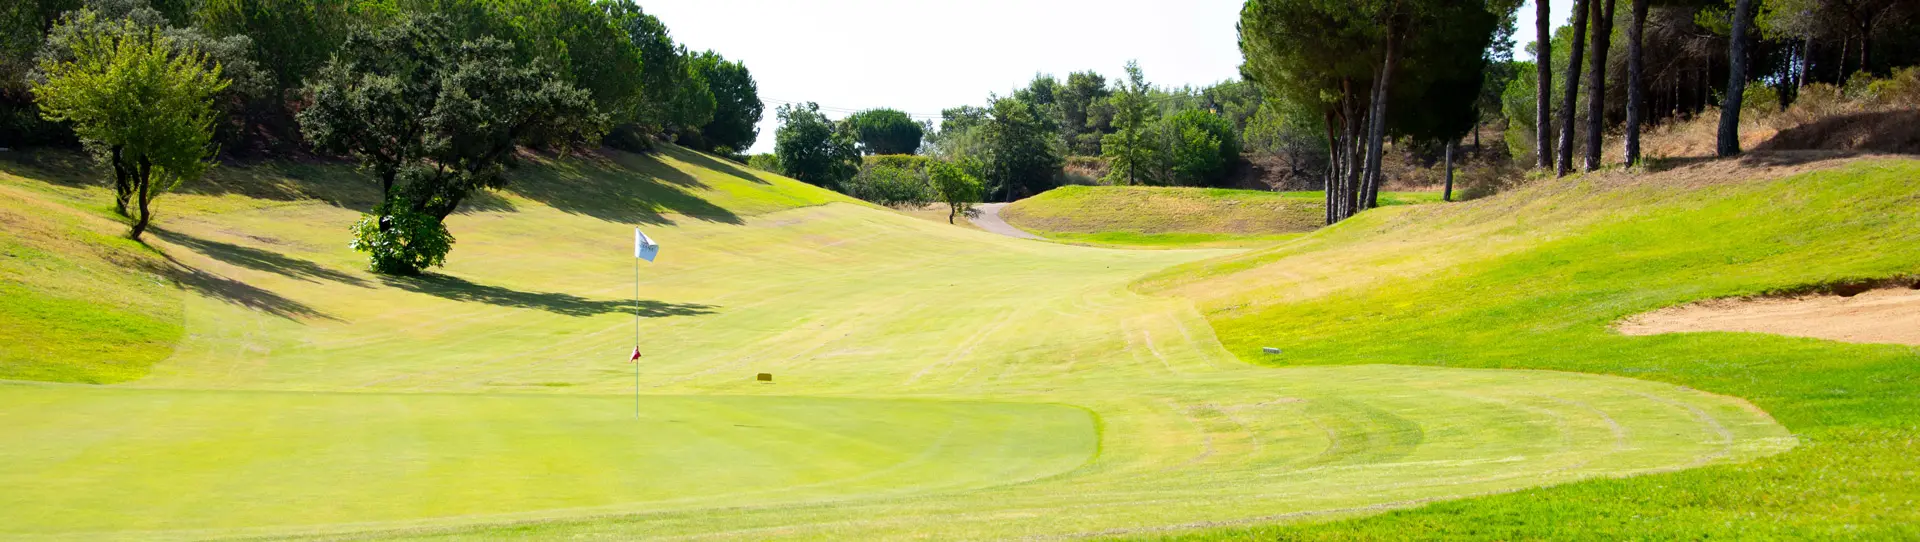 Portugal golf courses - Castro Marim Golf Course - Photo 3